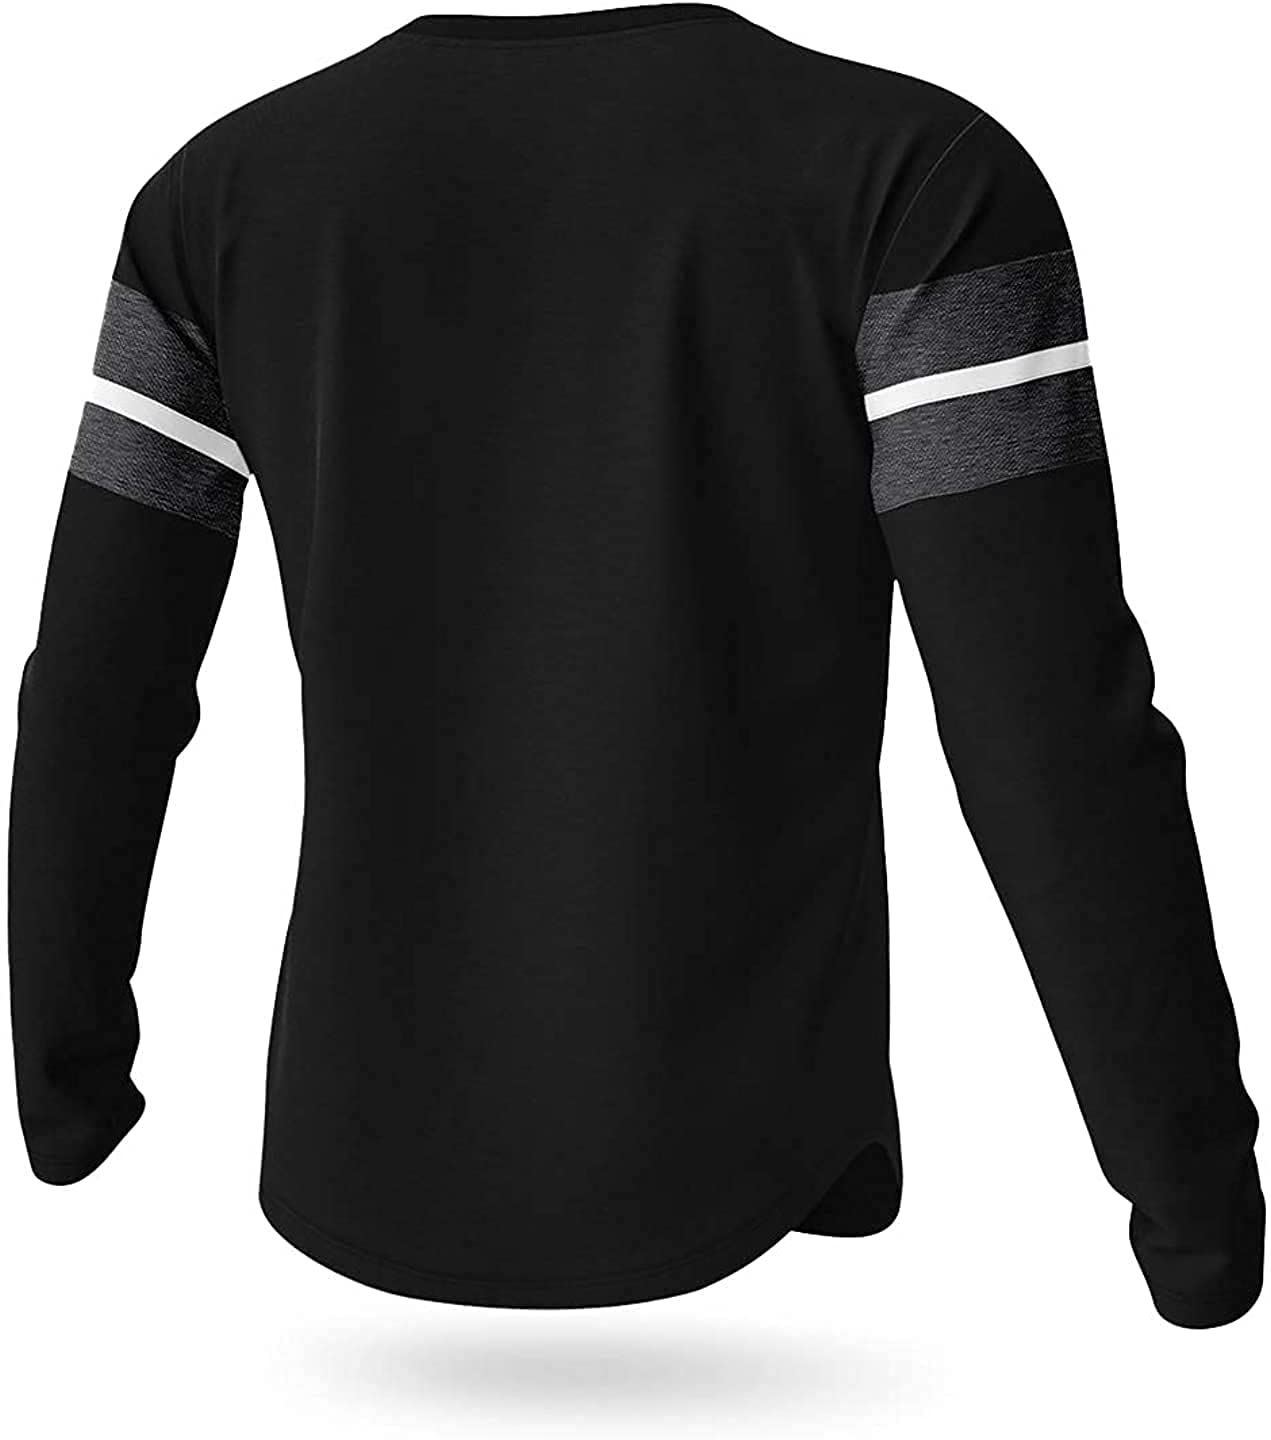 Black T-shirt for men - ronexro